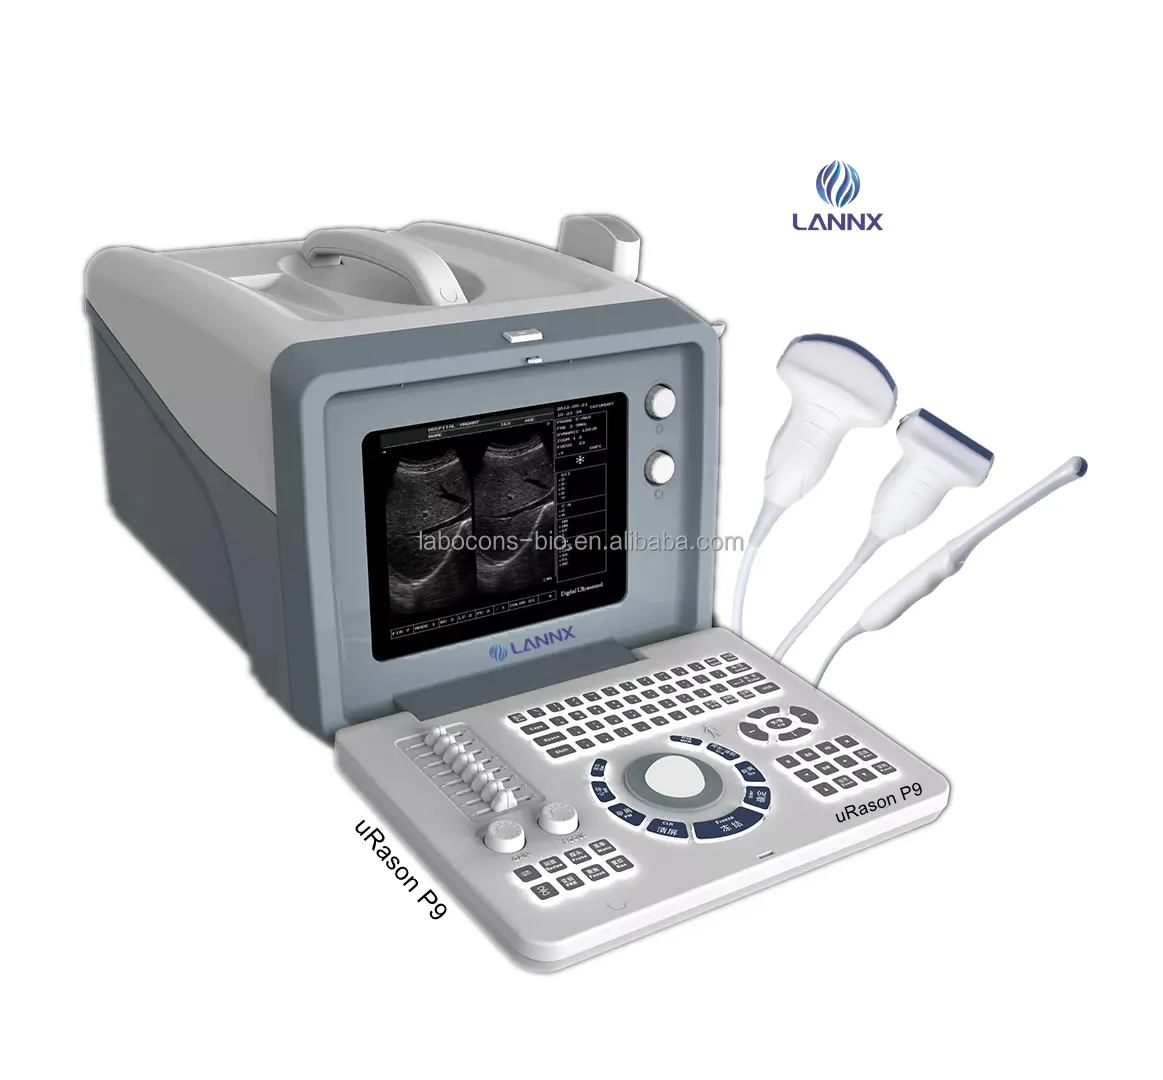 LANNX uRason P9 Fully stocked Echography laptop black/white digital instruments ultrasound portable ultrasonic diagnostic device